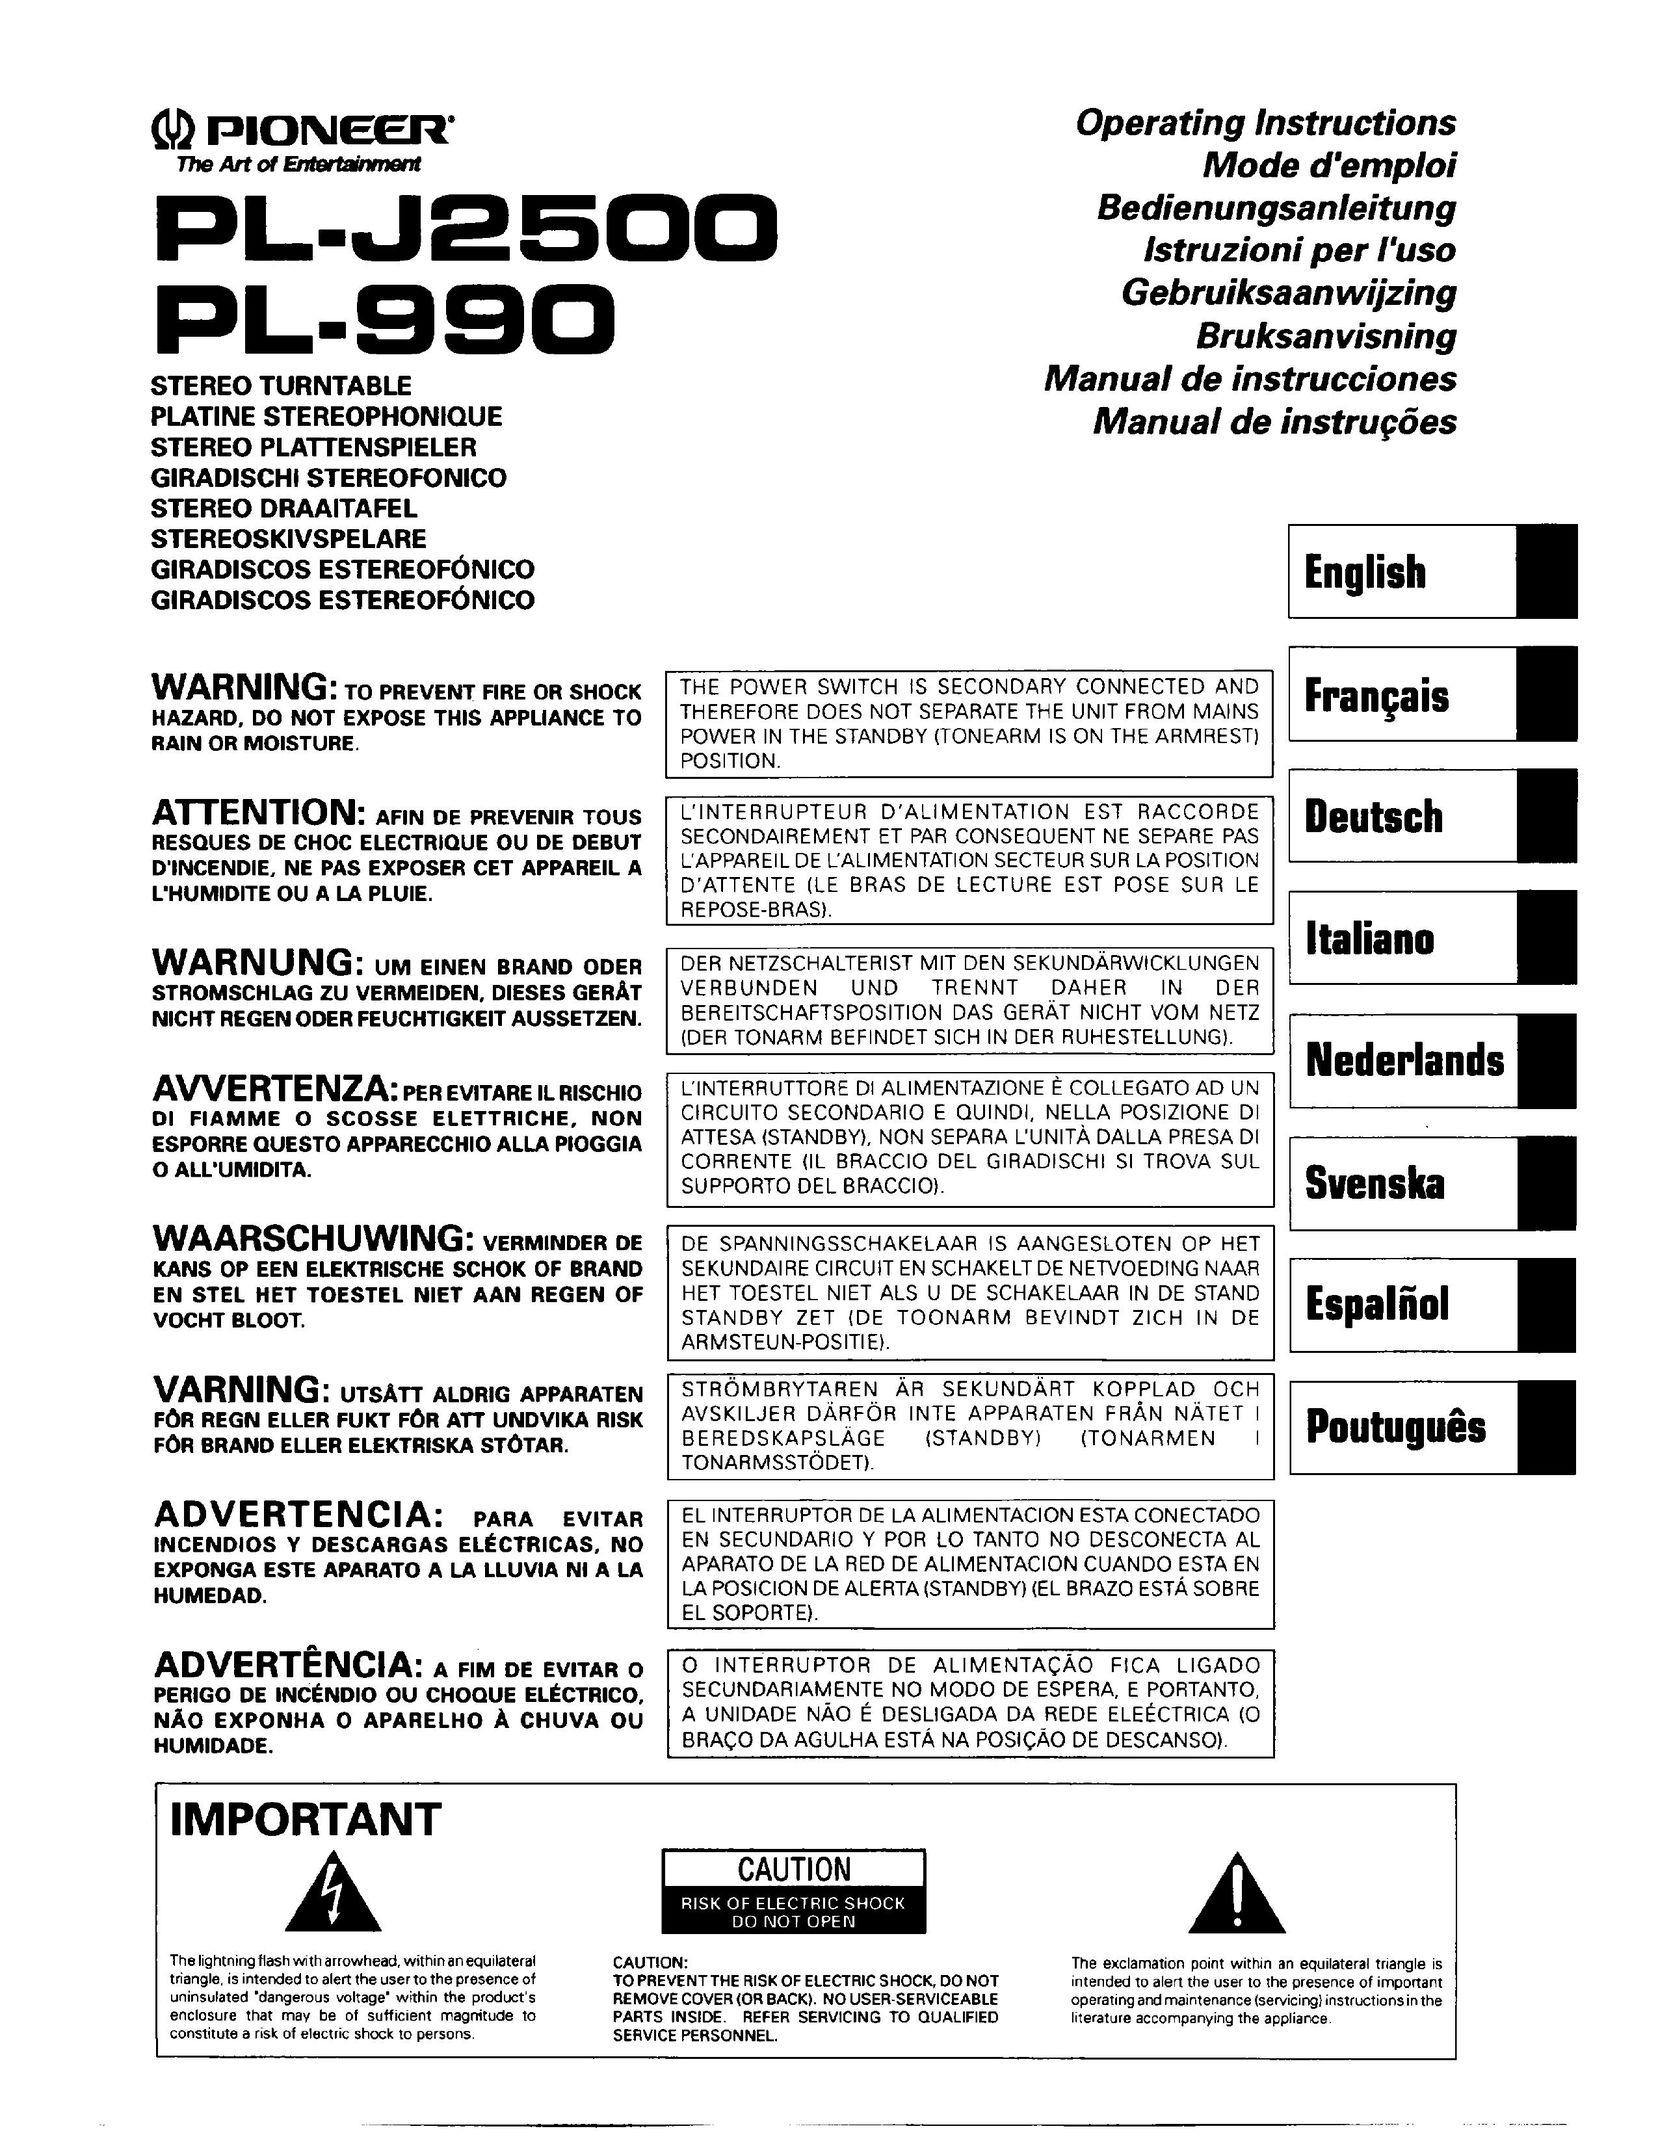 Pioneer PL-J2500 Turntable User Manual